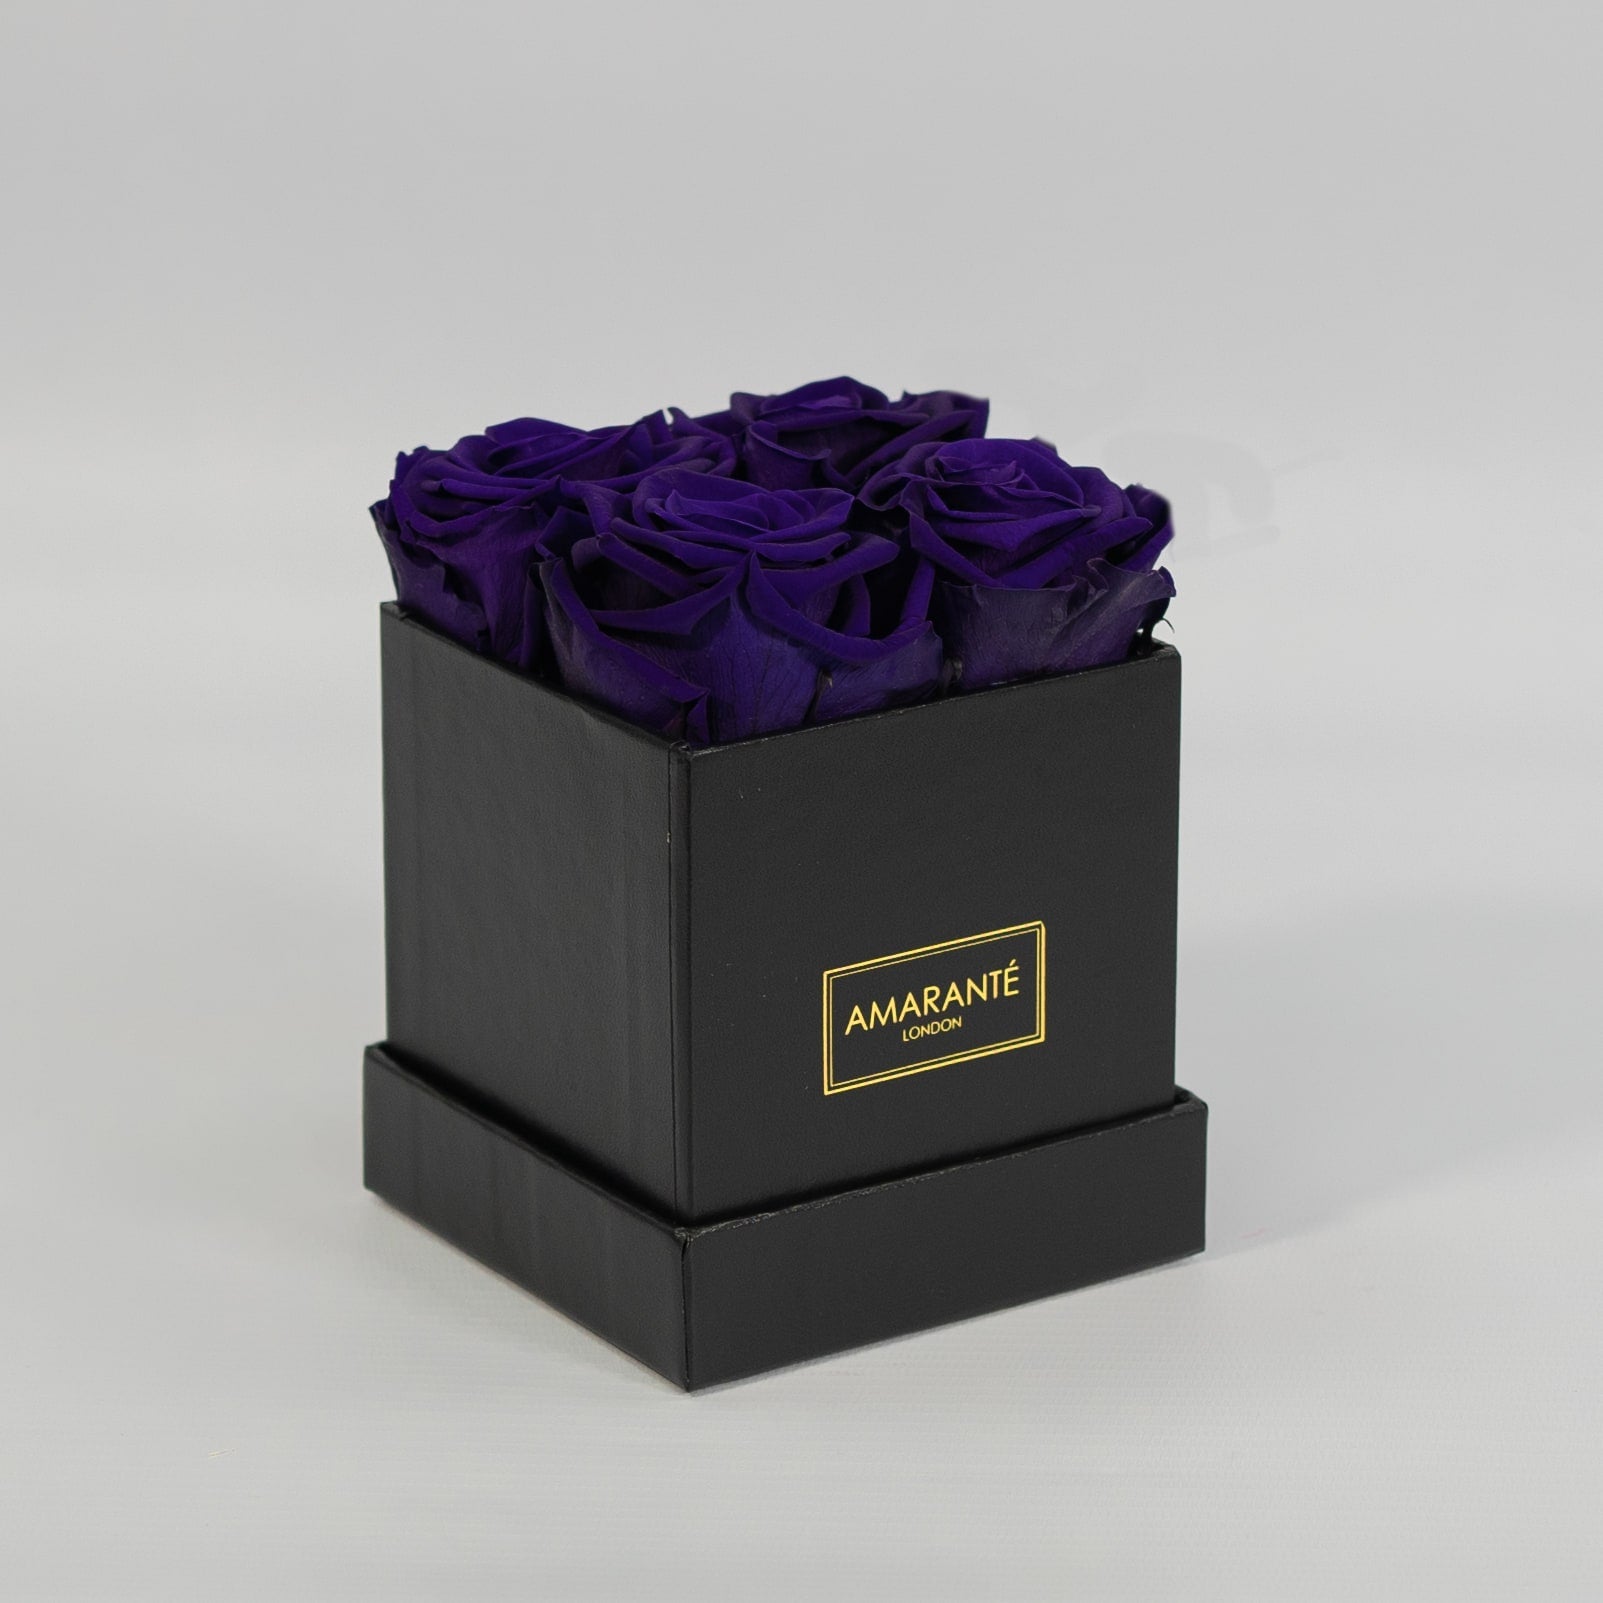 Magical dark purple roses encompassed in a stylish black box 